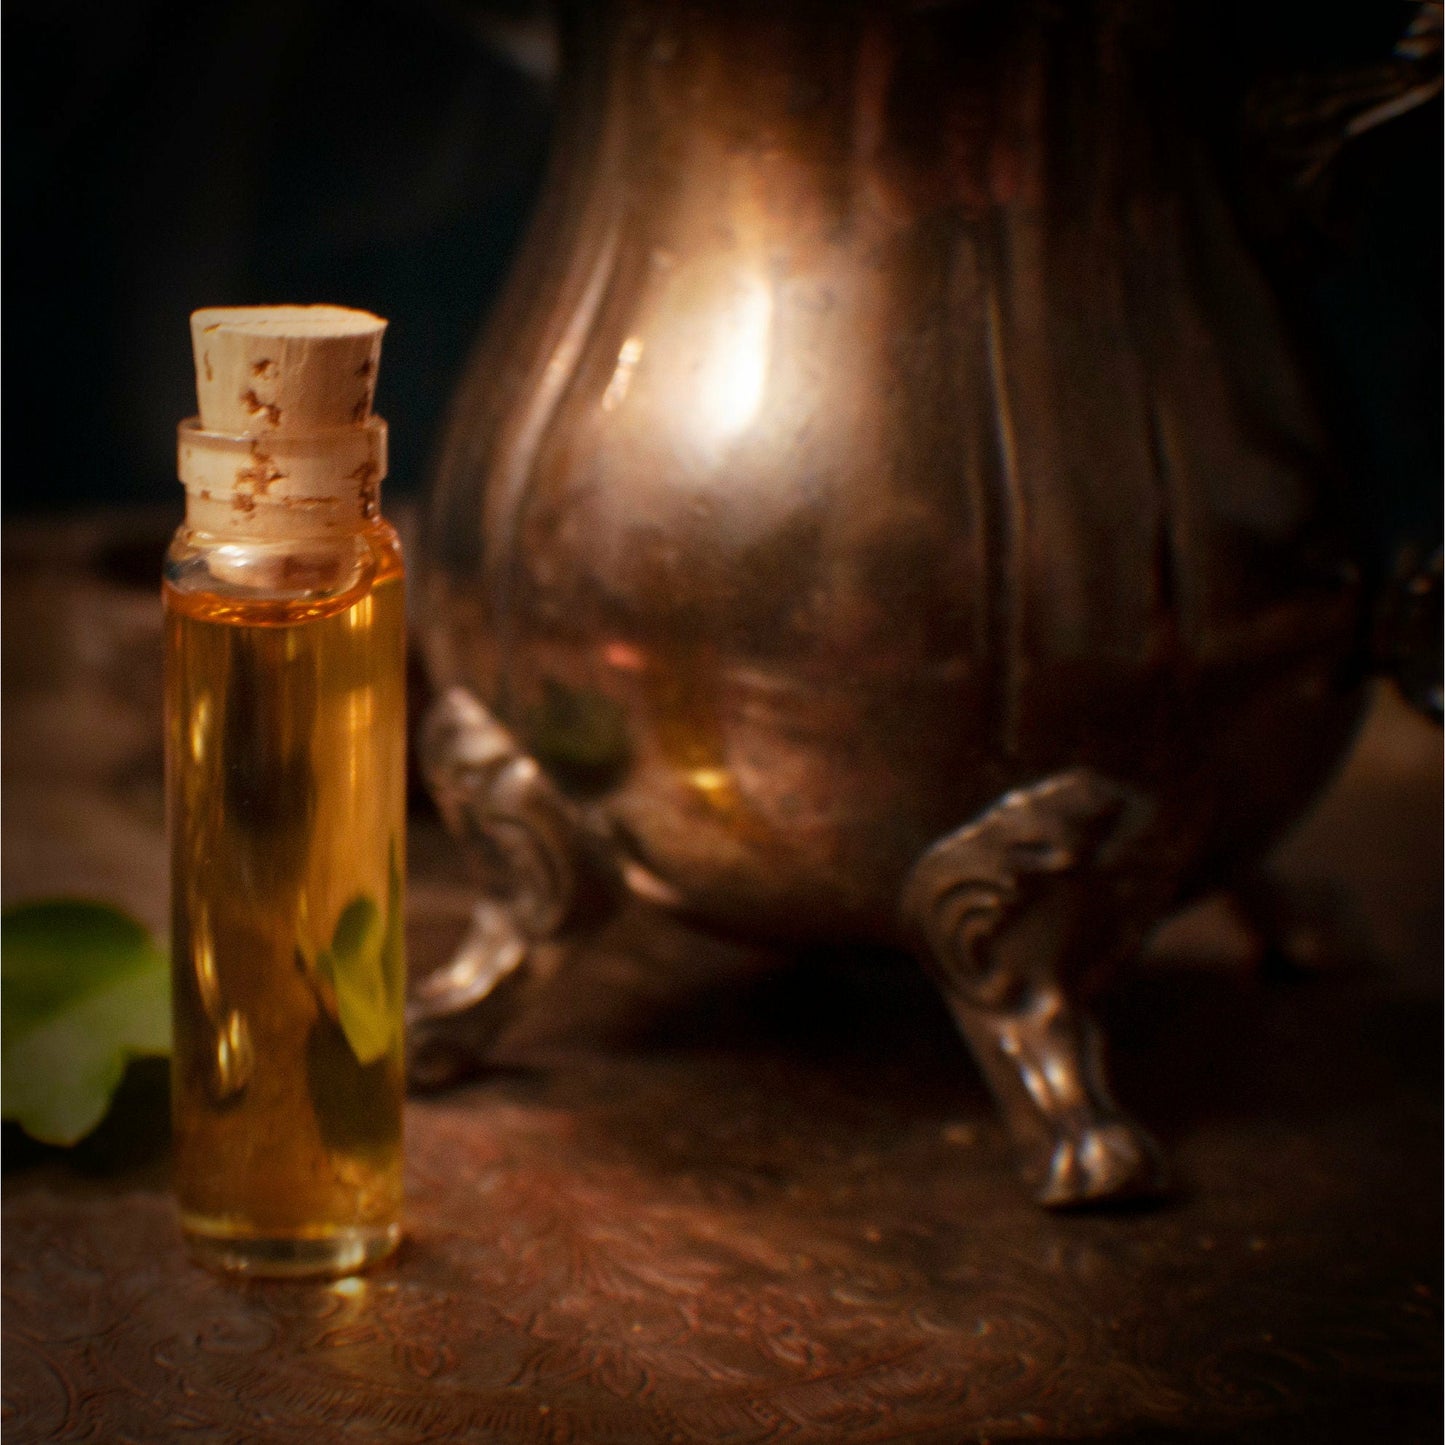 The Last Sip of Absinthe - Spiced Botanical Fragrance